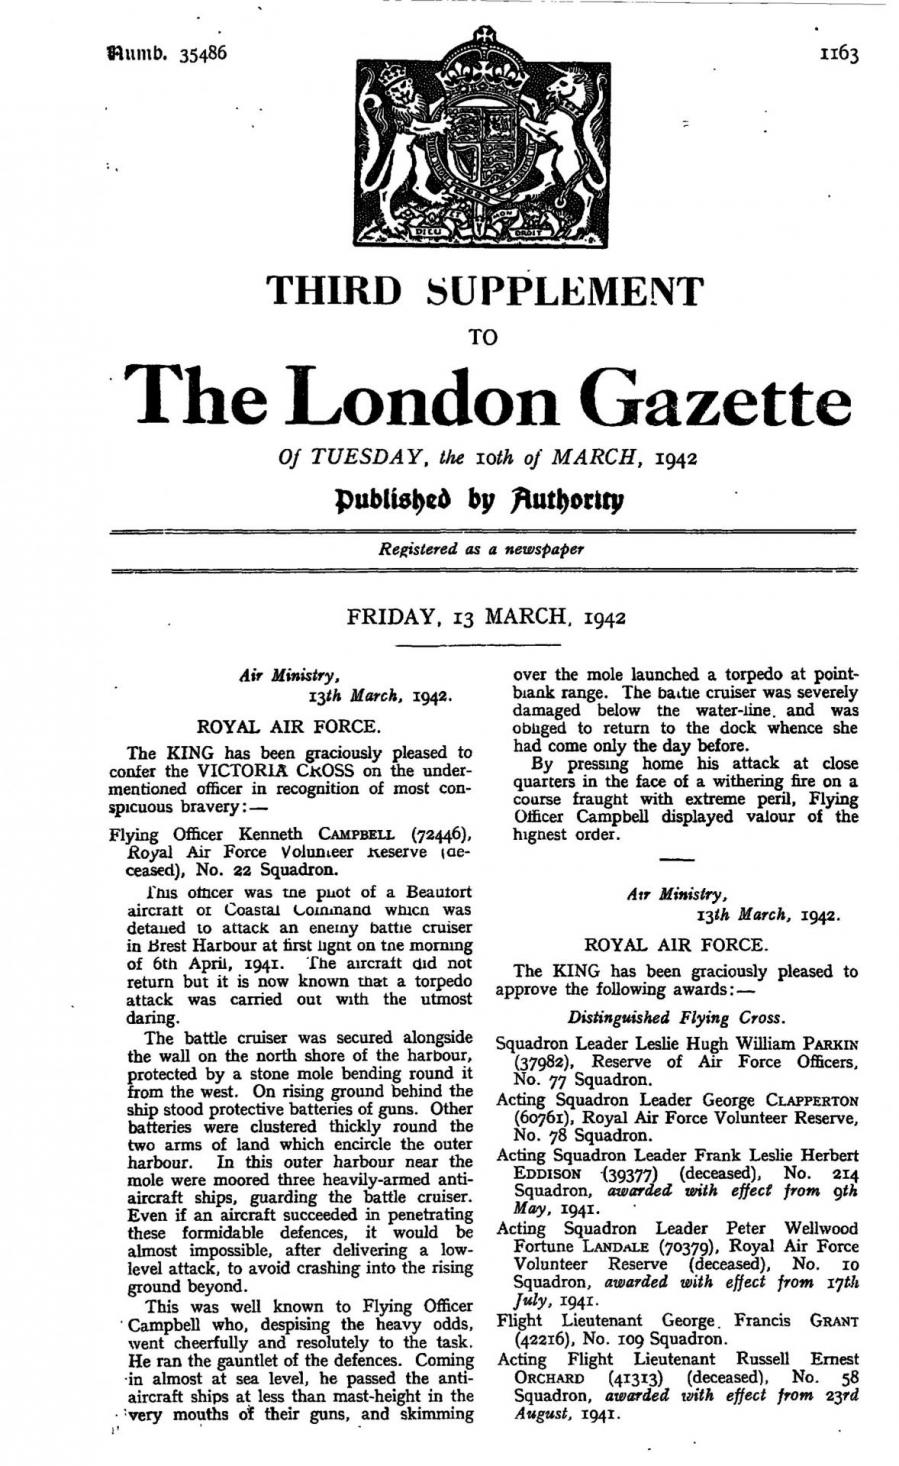 The london gazette 10th 13th march 1942